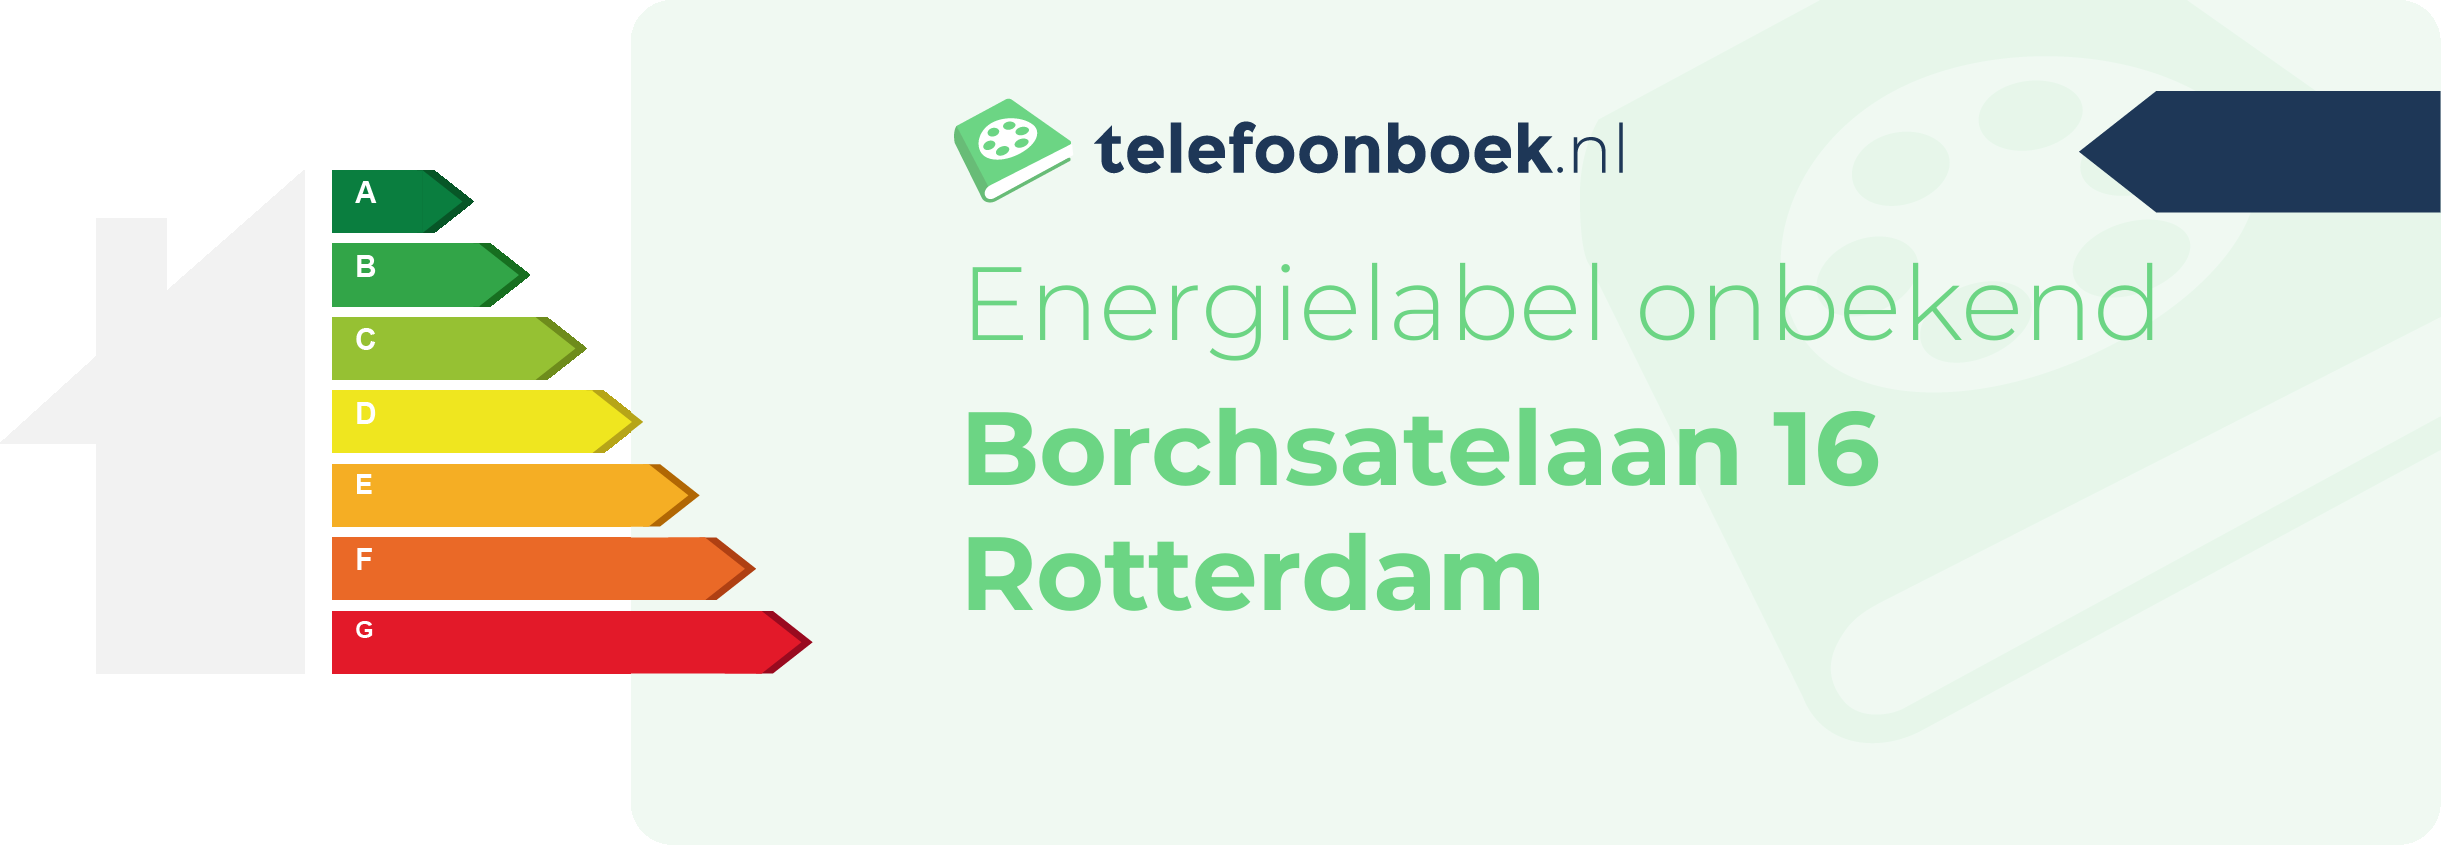 Energielabel Borchsatelaan 16 Rotterdam